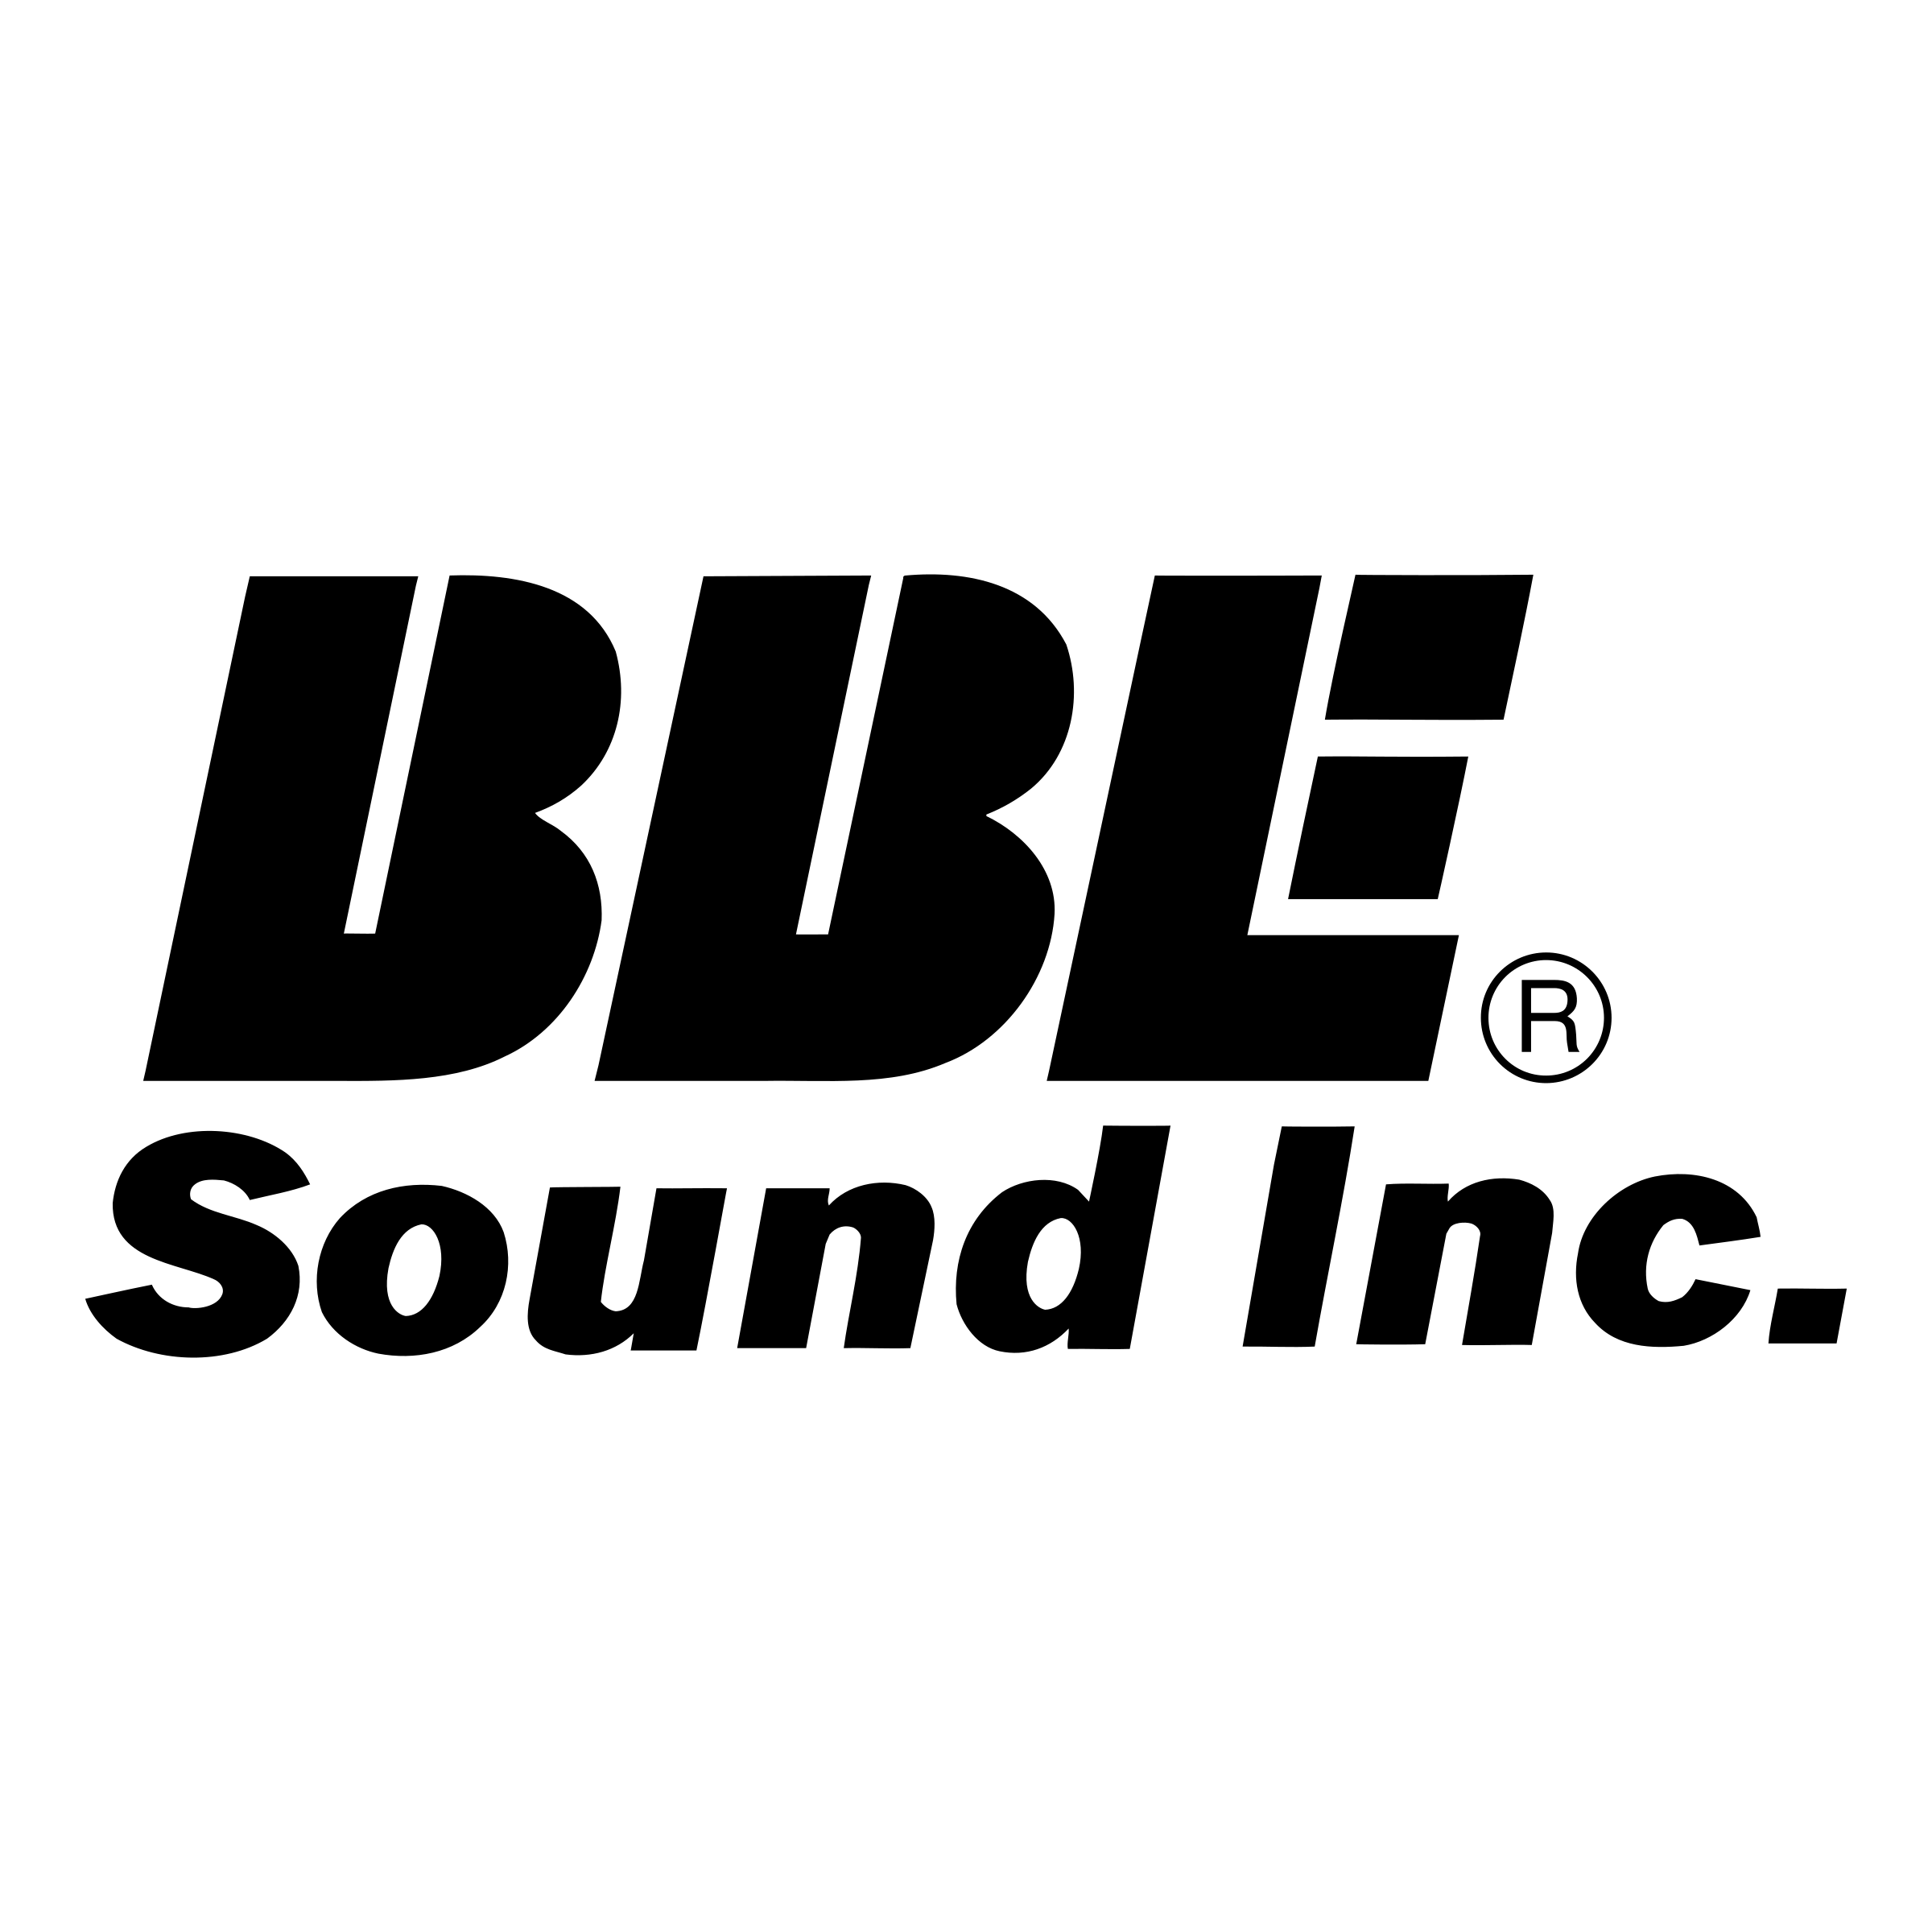 BBE Logo - BBE Sound Inc 01 Logo PNG Transparent & SVG Vector - Freebie Supply